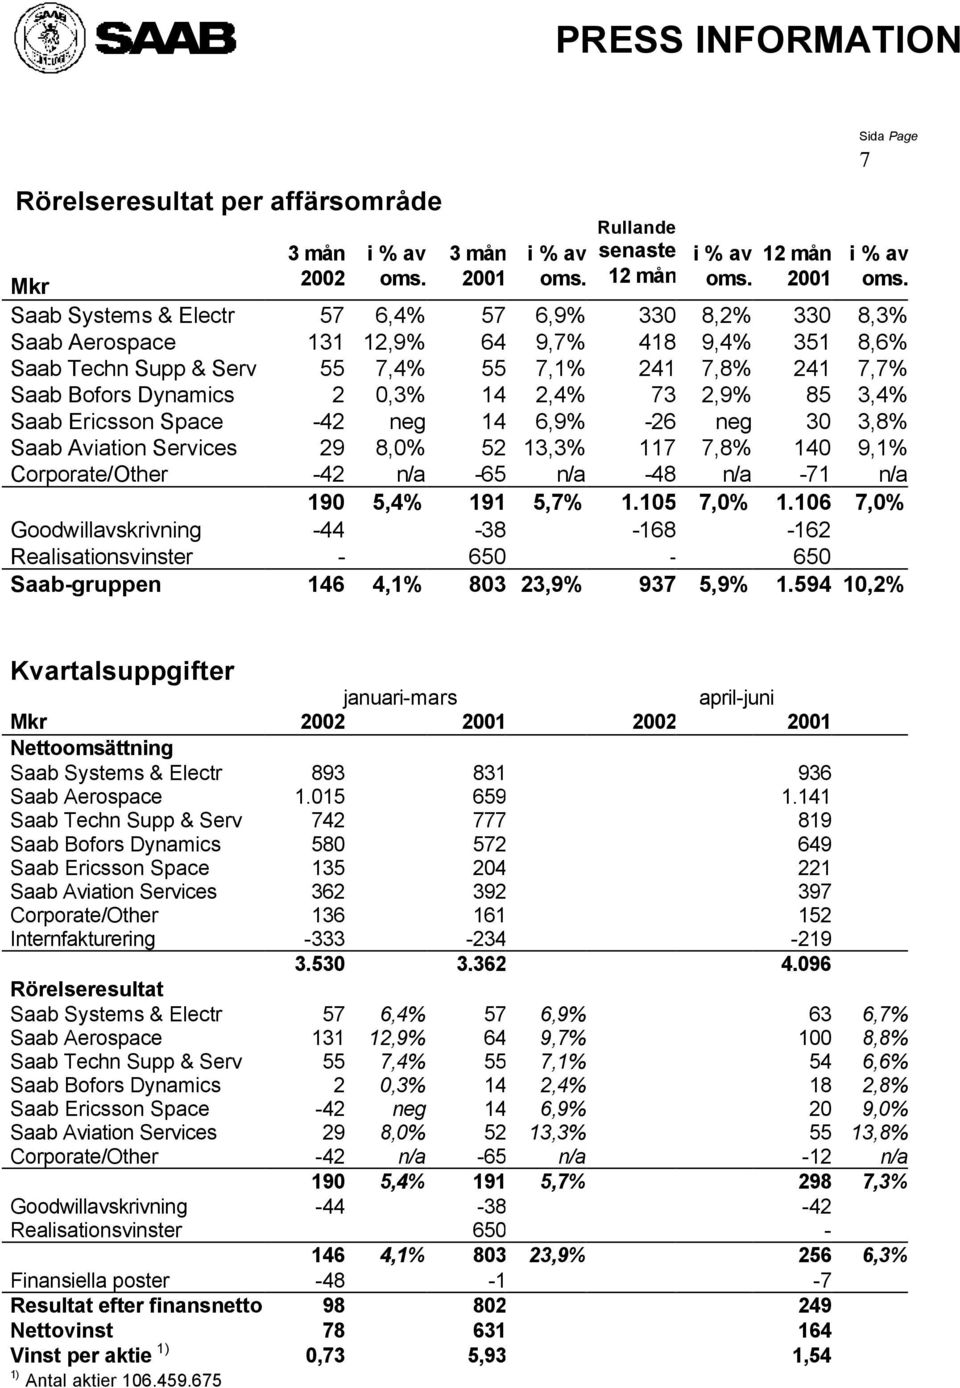 73 2,9% 85 3,4% Saab Ericsson Space -42 neg 14 6,9% -26 neg 30 3,8% Saab Aviation Services 29 8,0% 52 13,3% 117 7,8% 140 9,1% Corporate/Other -42 n/a -65 n/a -48 n/a -71 n/a 190 5,4% 191 5,7% 1.